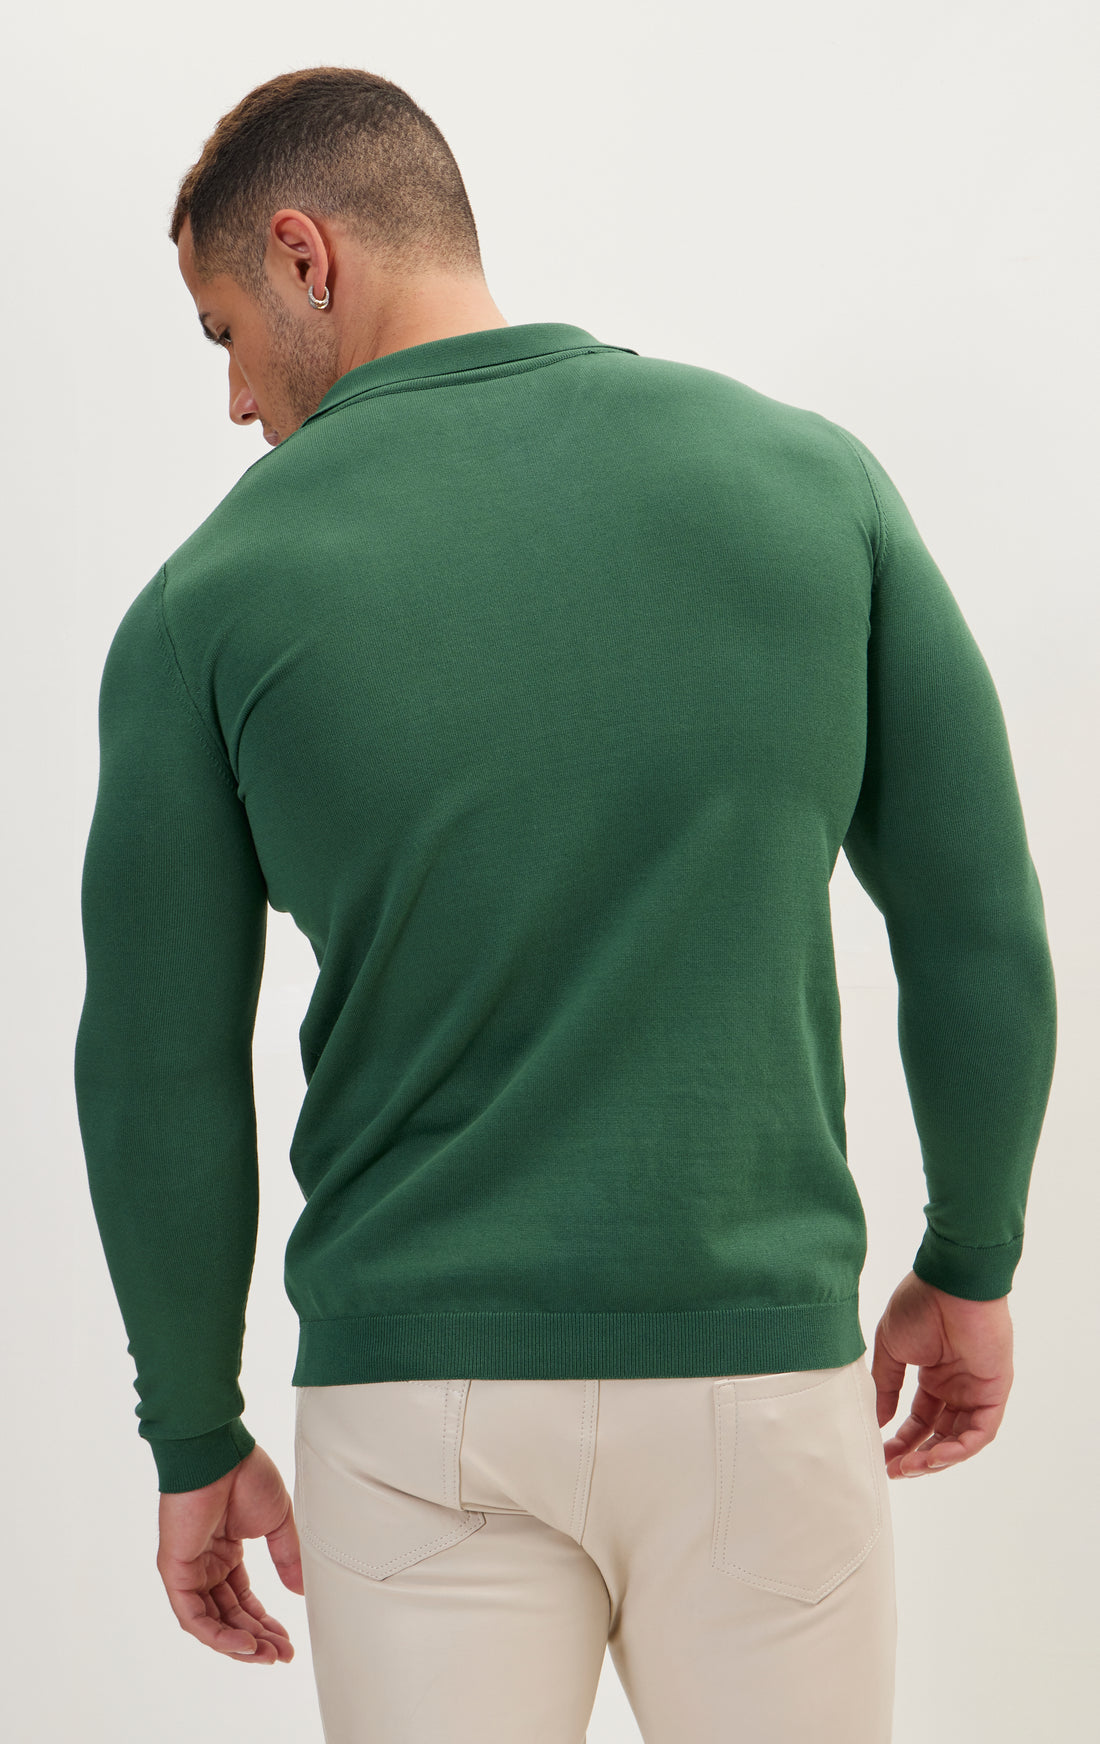 N° 6464 johnny-collar sweater polo - Green